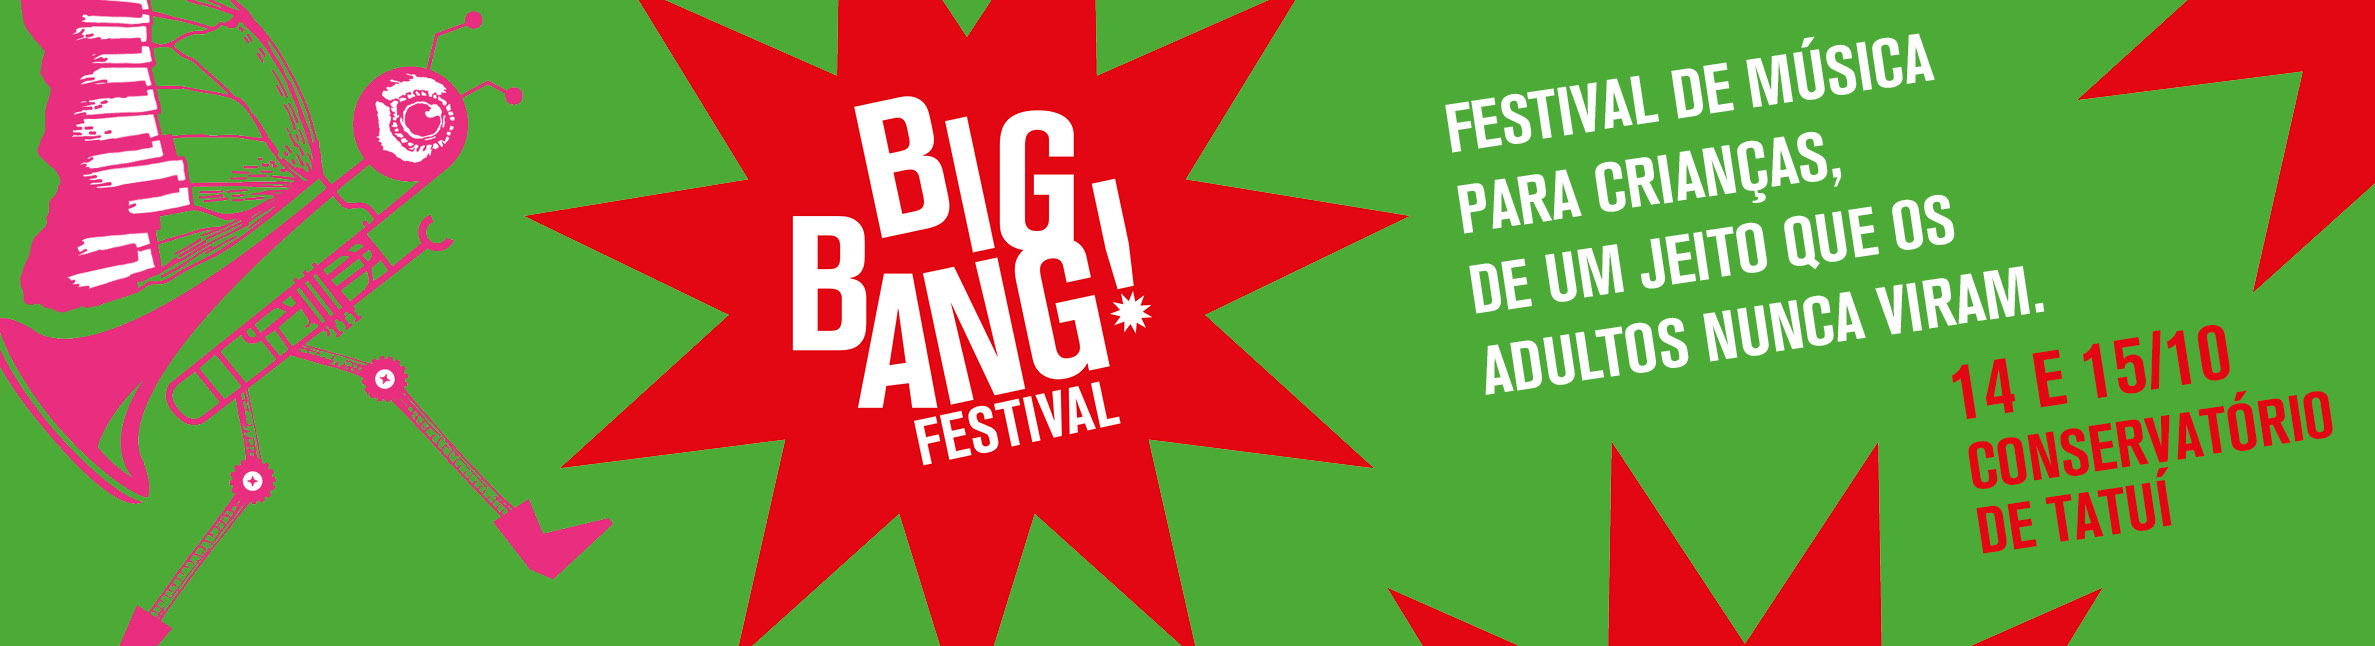 Banner_Big Bang Festival